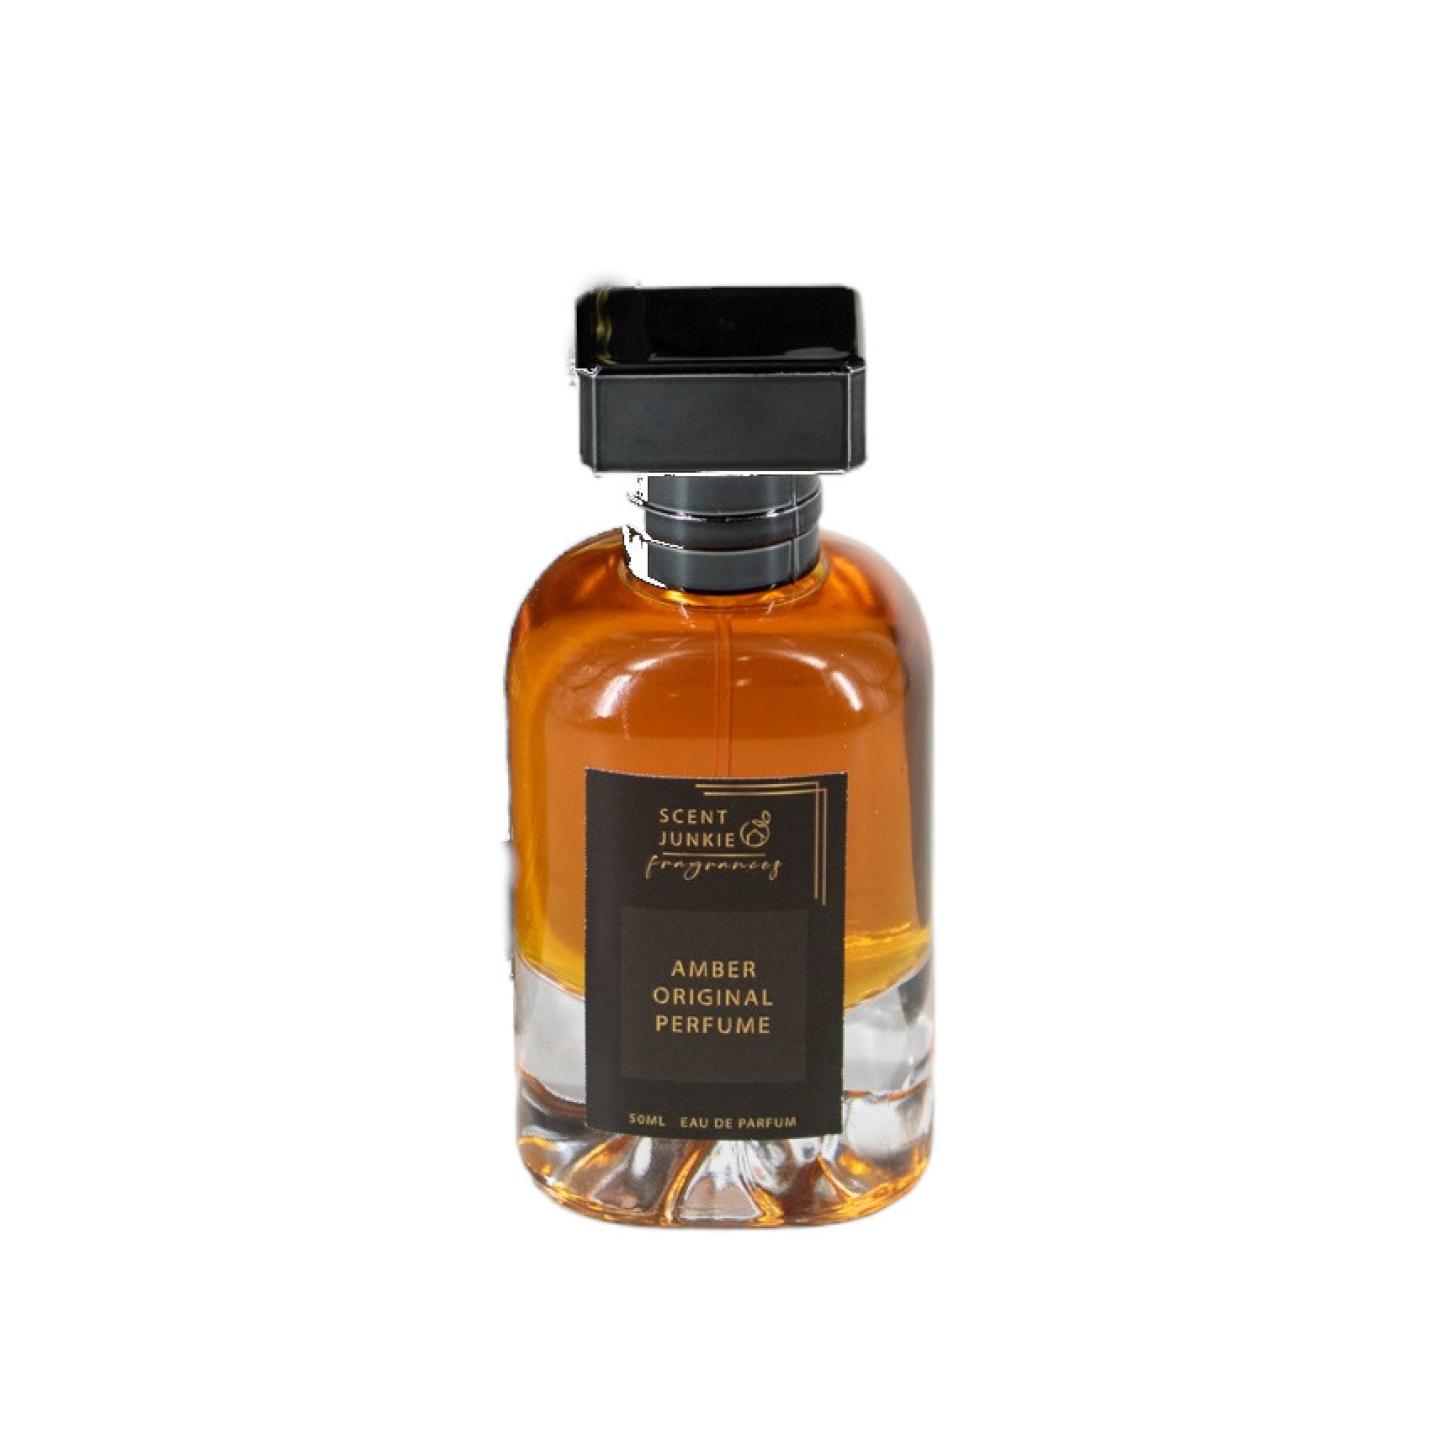 Parfum Original AMBER 50ml eau de parfum – Scent Junkie